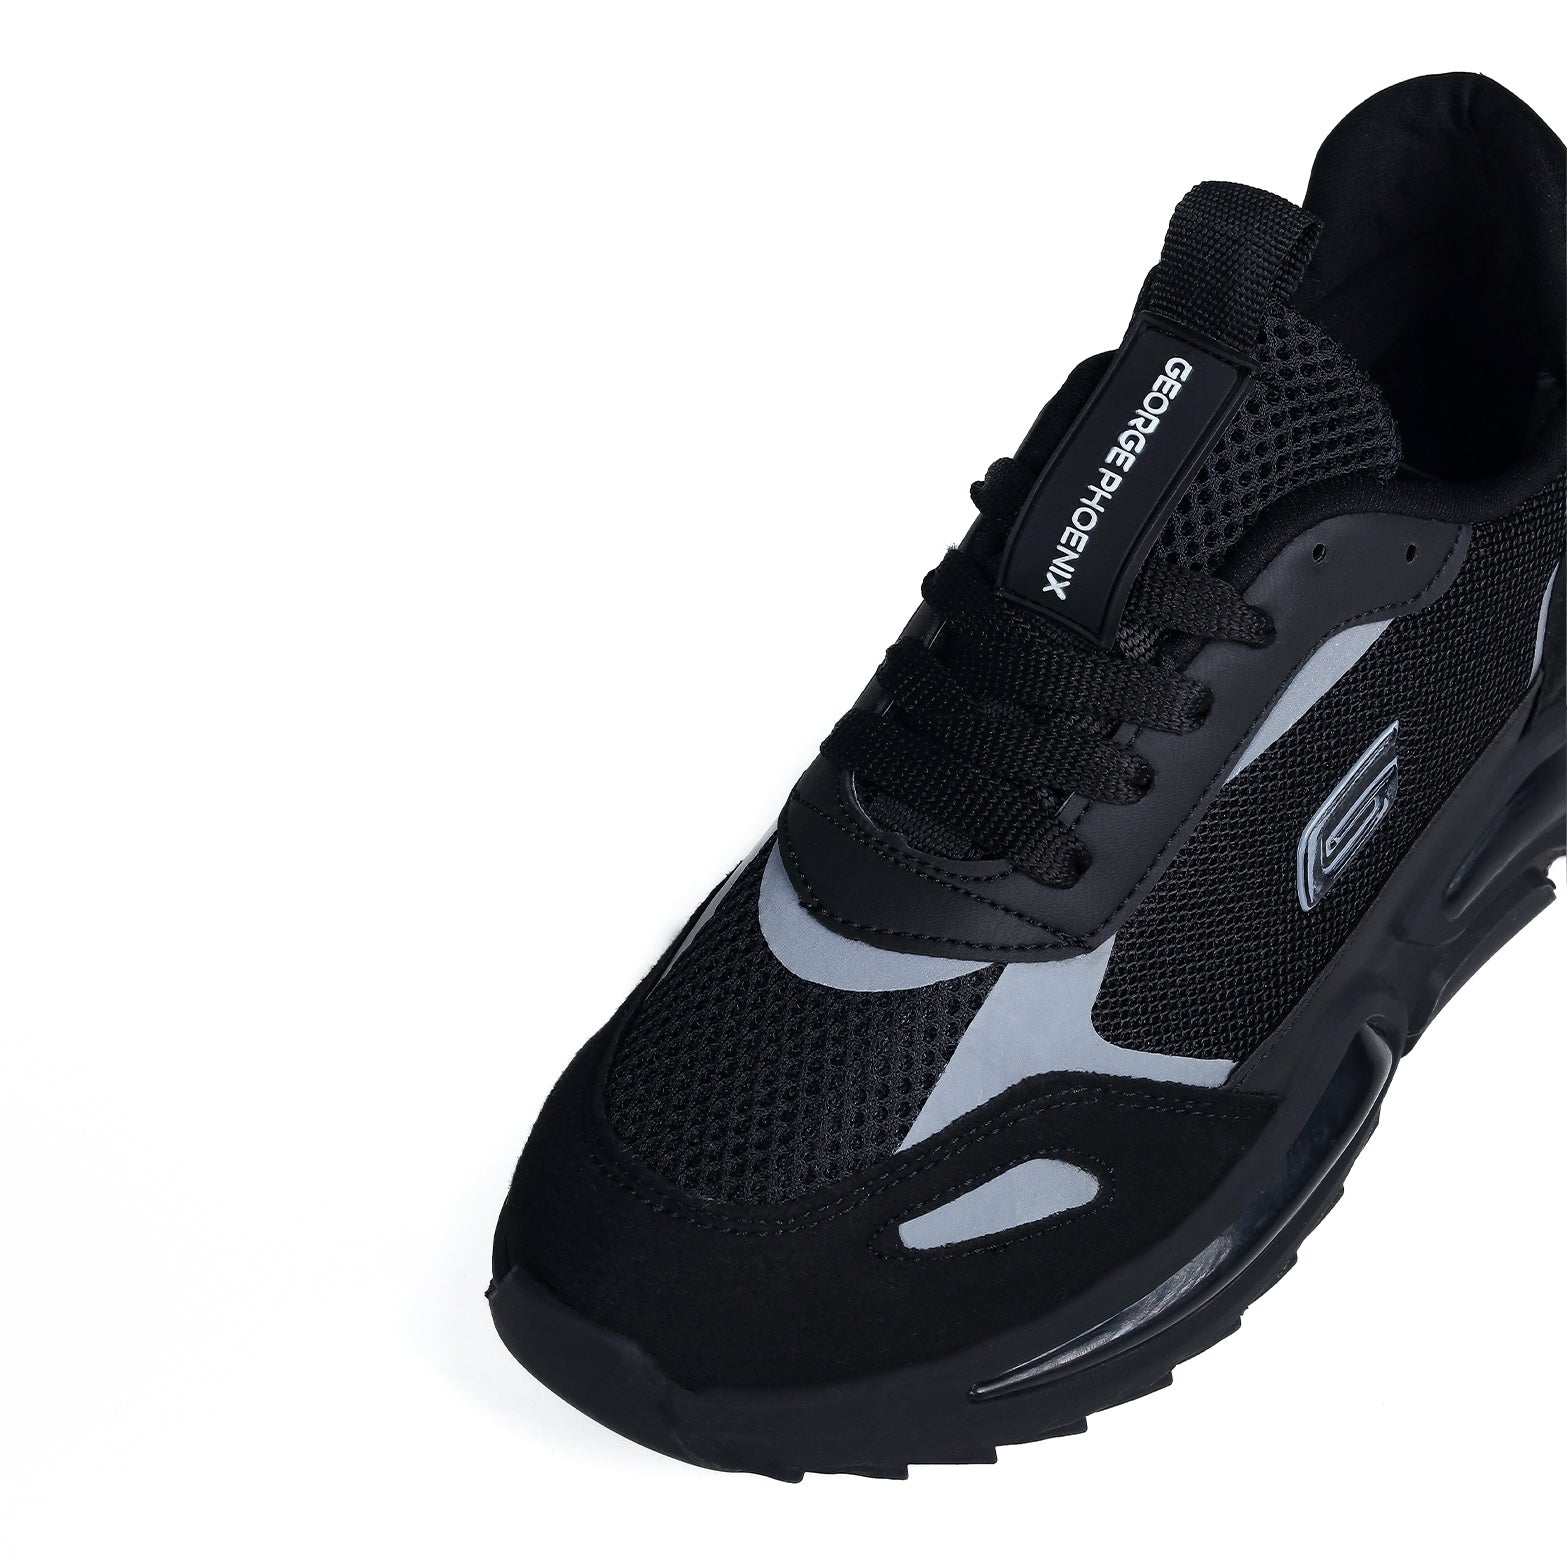 DI MILANO Siyah Beyaz Erkek Sneakers Spor Ayakkabı